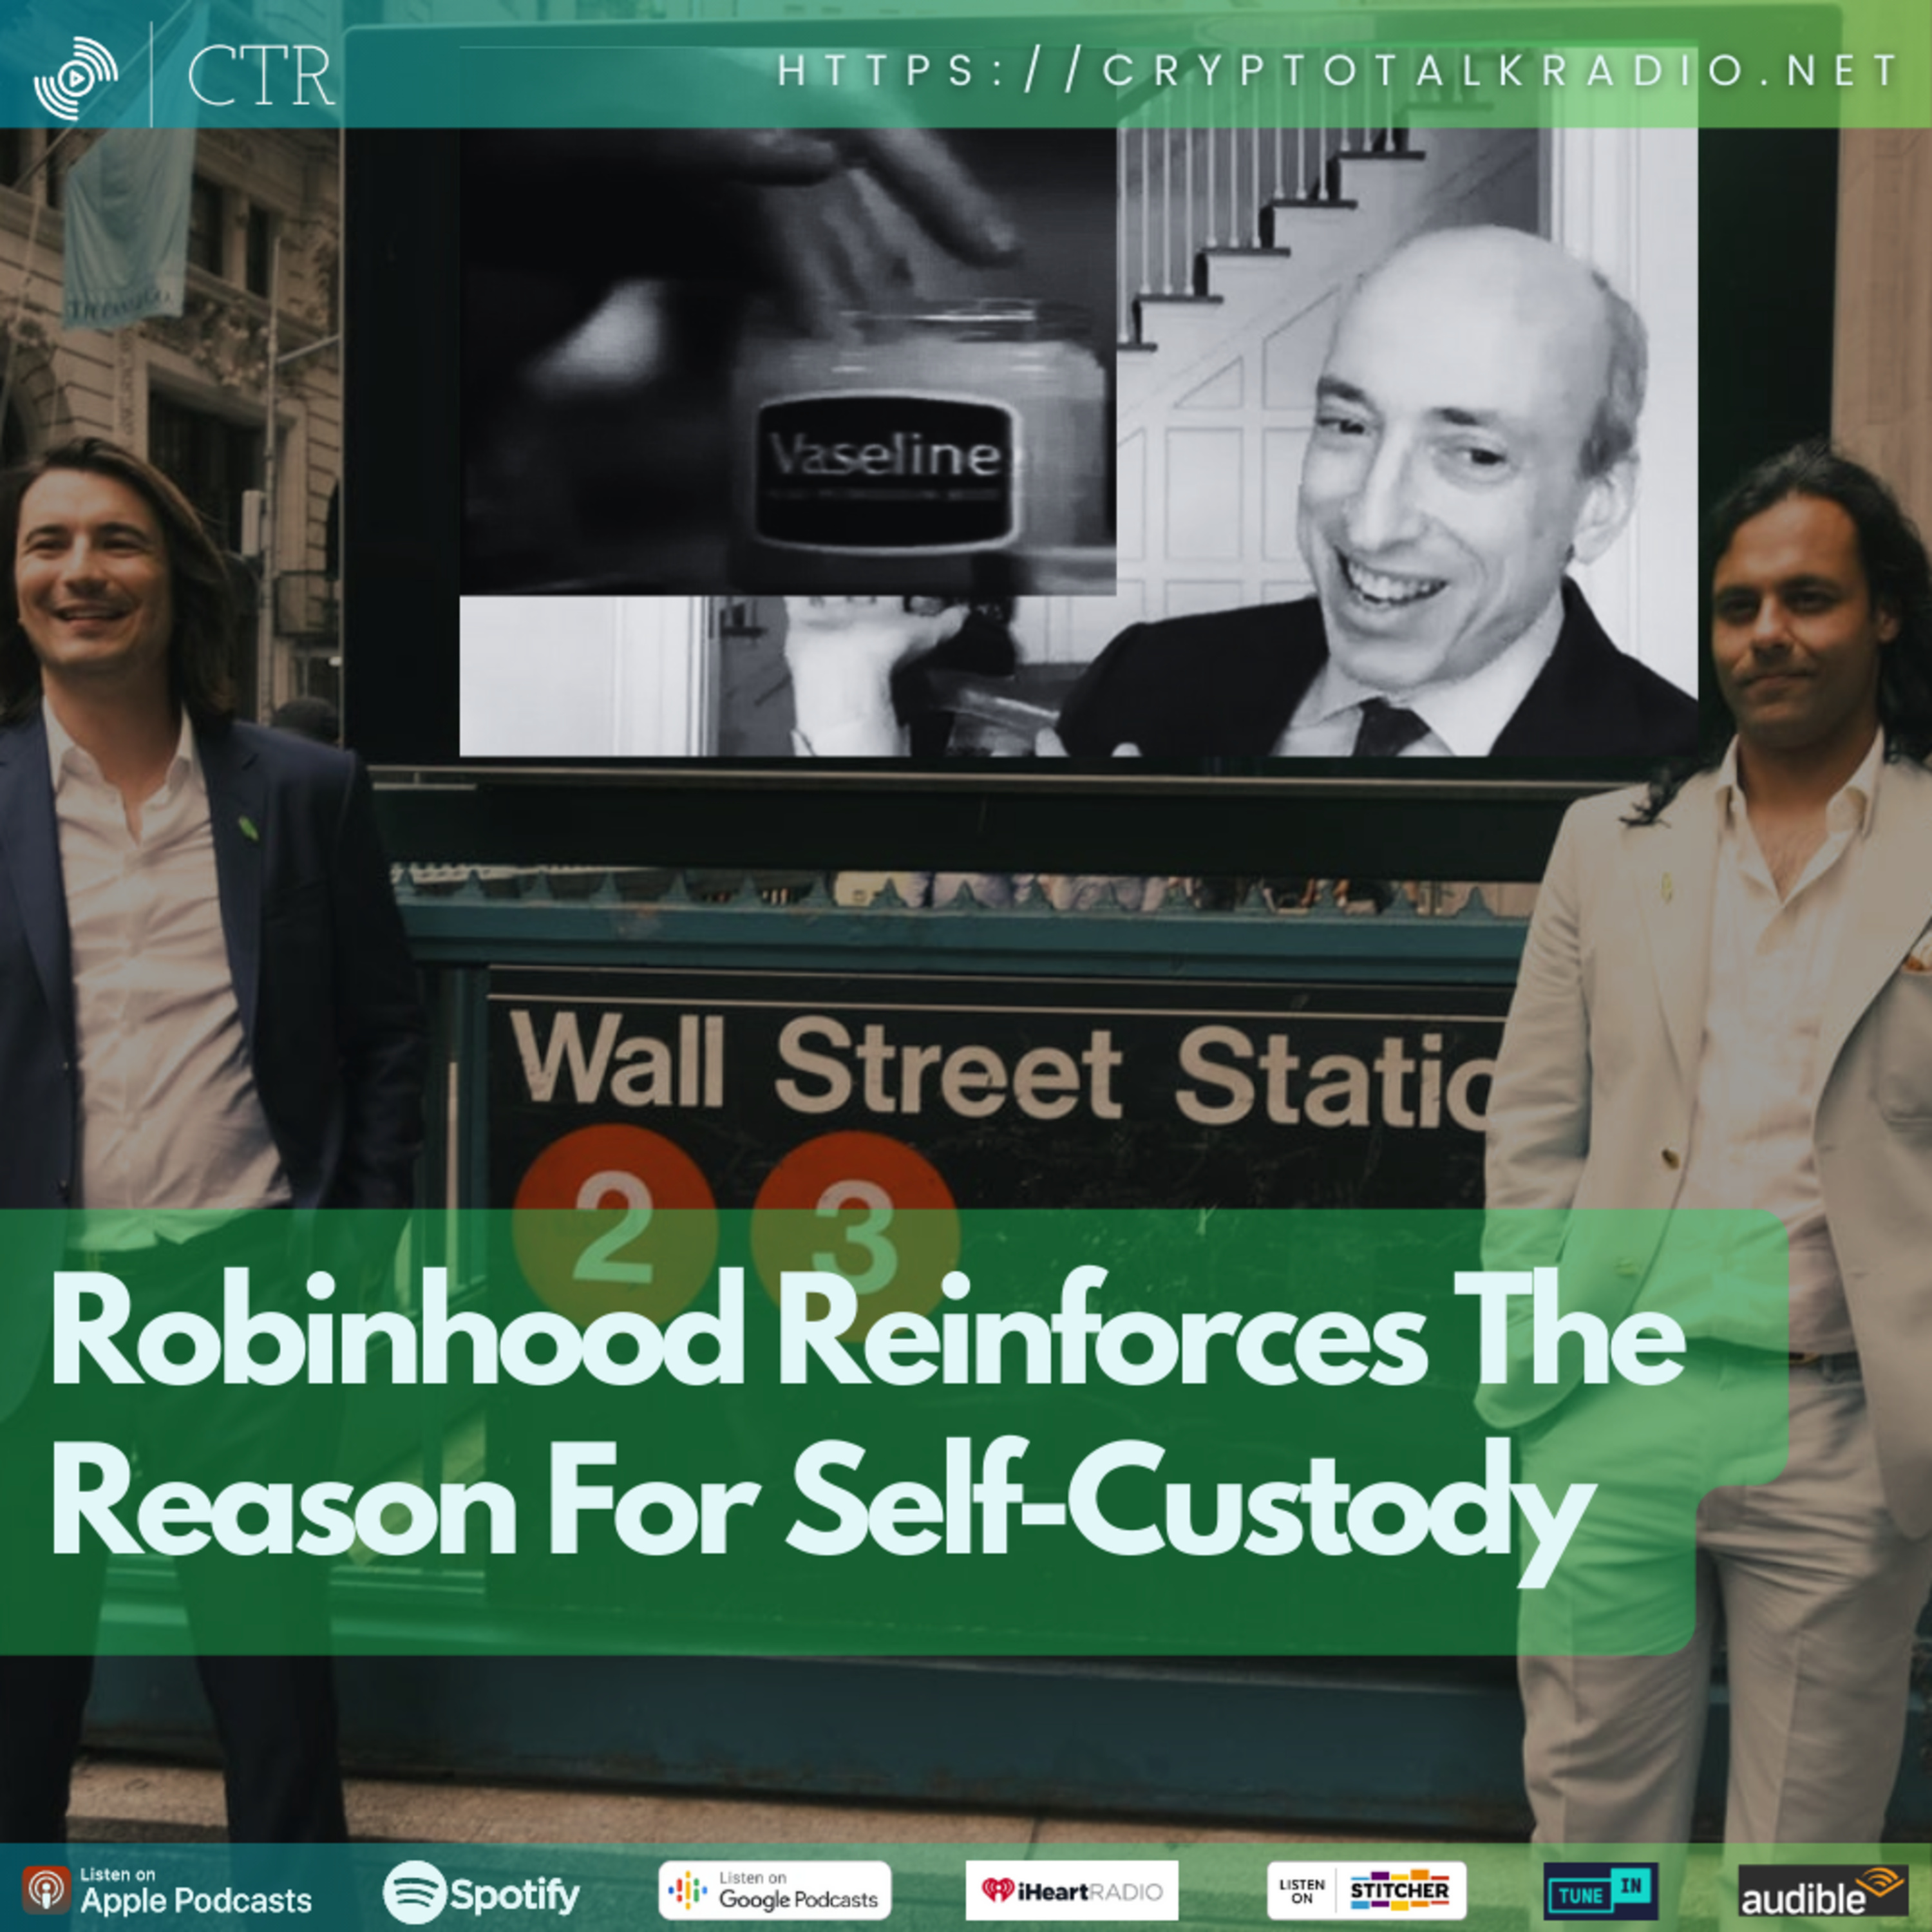 #Robinhood Reinforces The Reason For Self-Custody